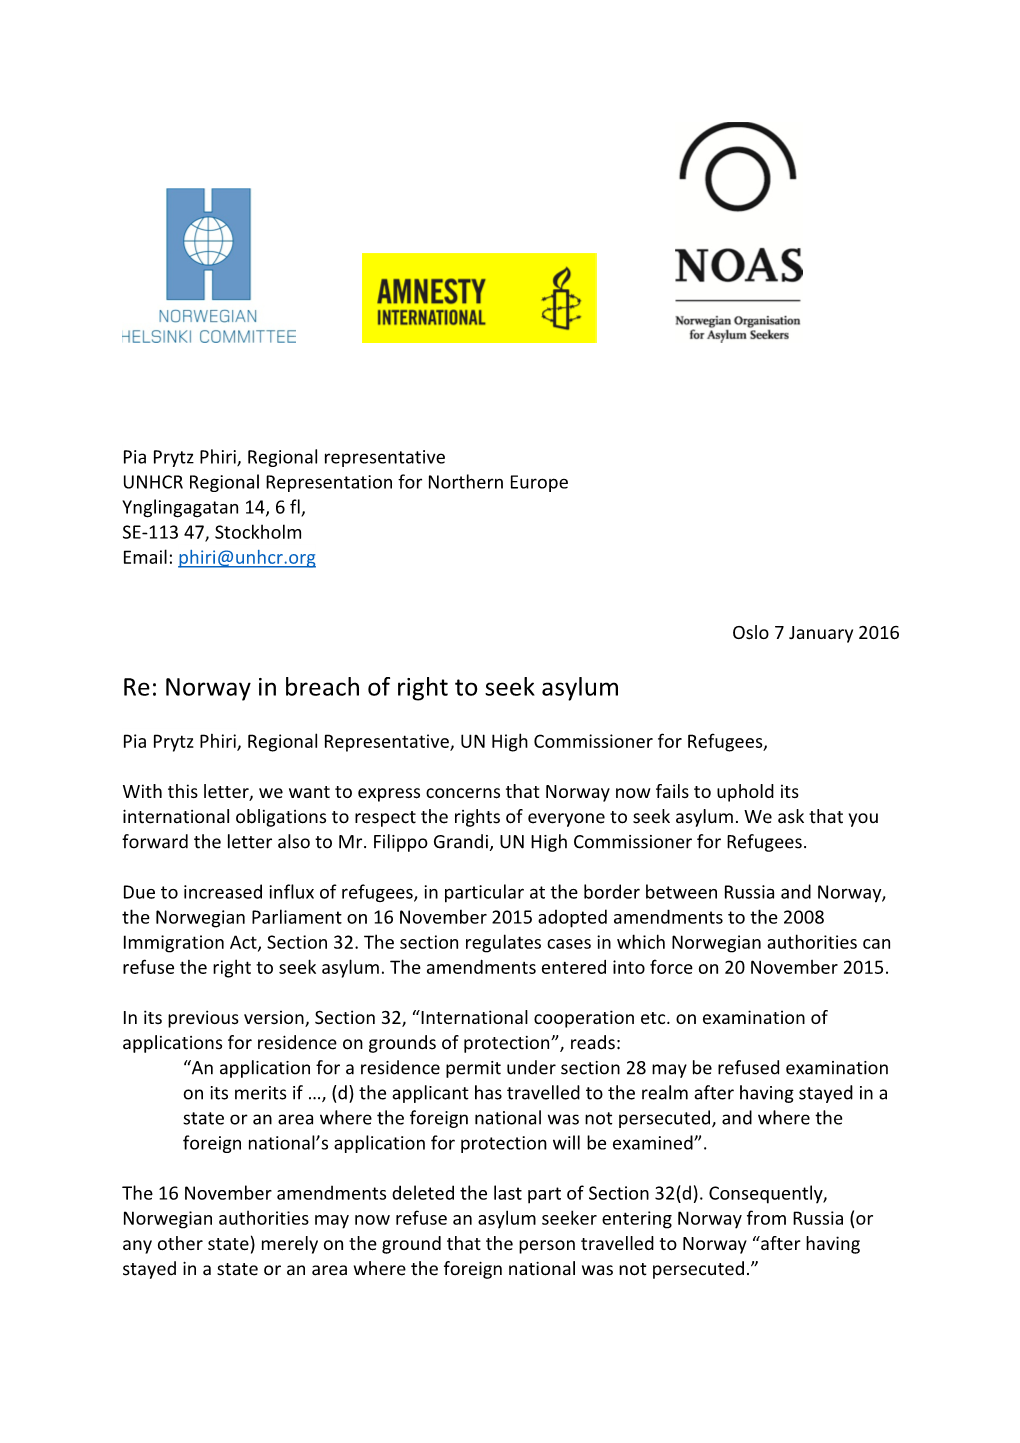 Re: Norway in Breach of Right to Seek Asylum